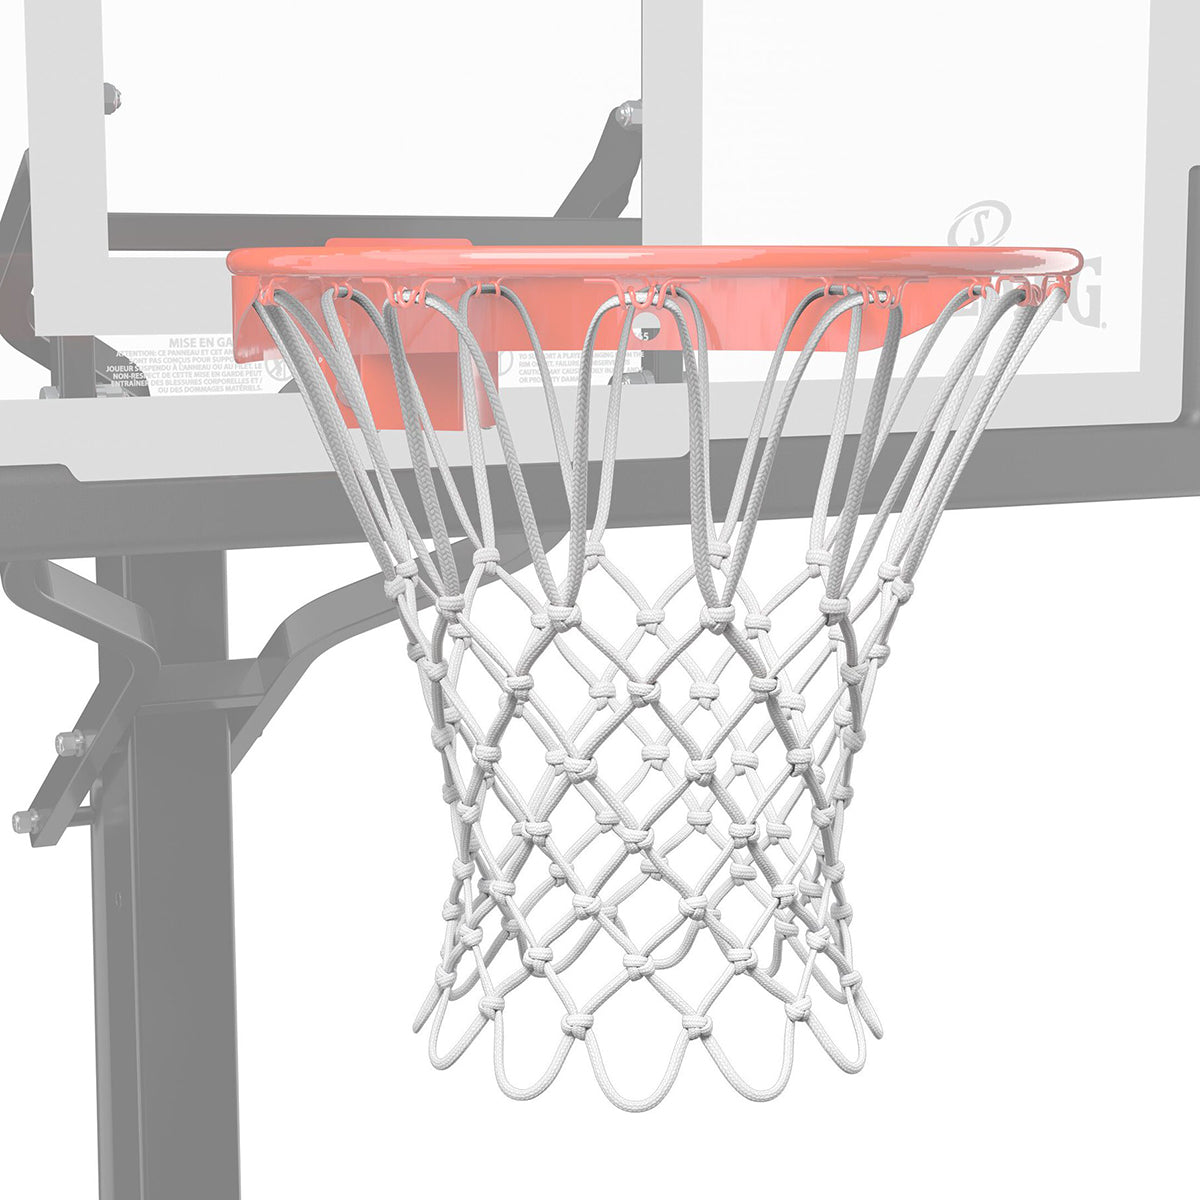 Spalding Heavy Duty Indoor/Outdoor Basketball Net - White Spalding